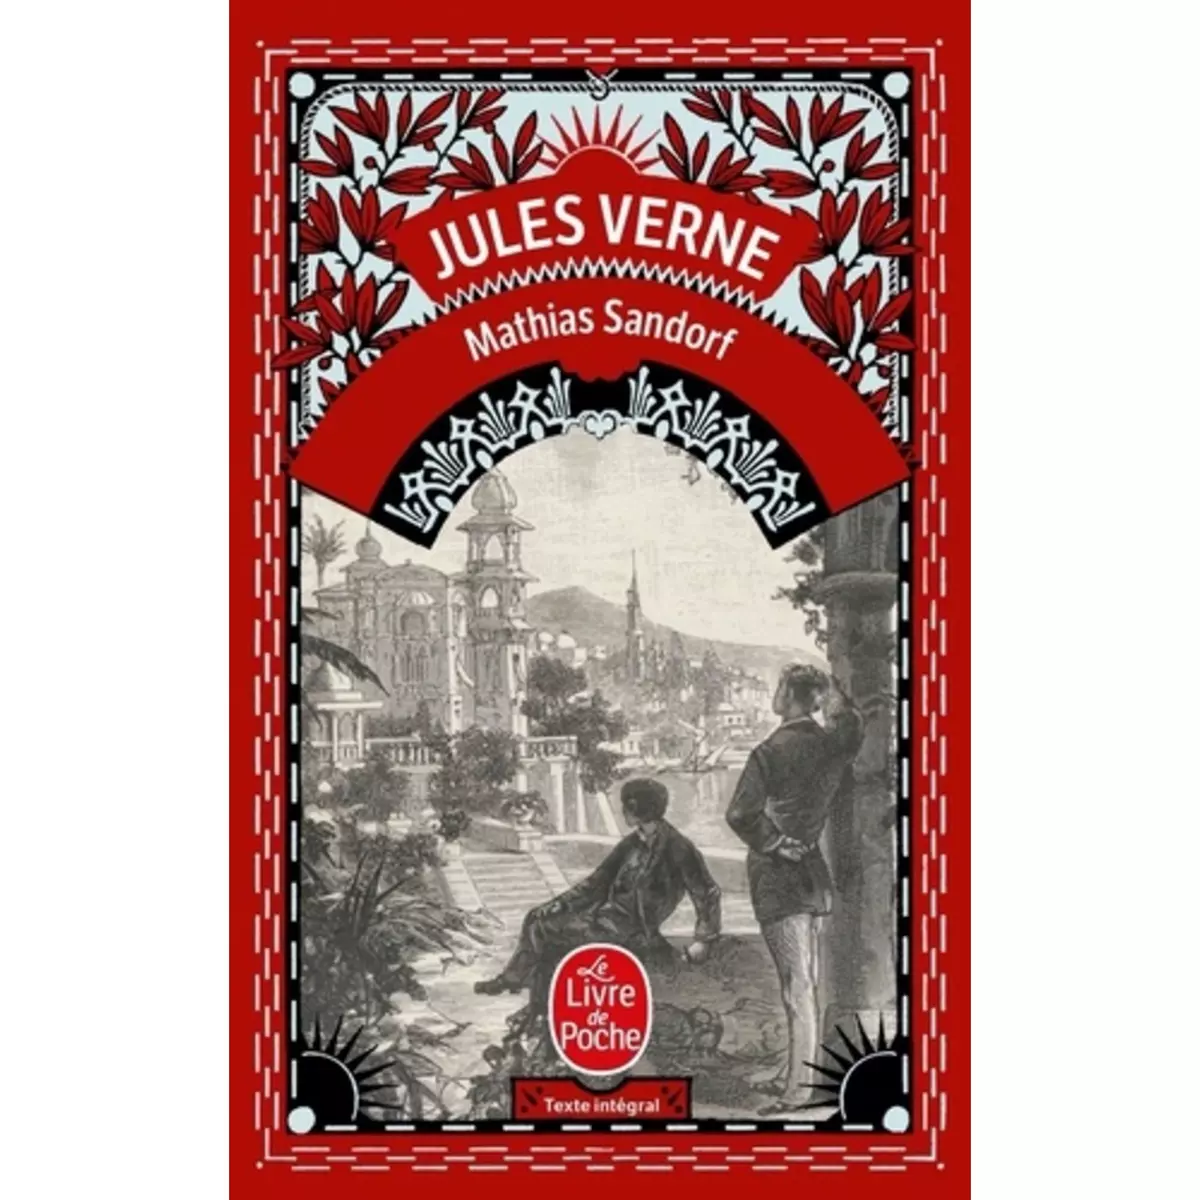  MATHIAS SANDORF, Verne Jules